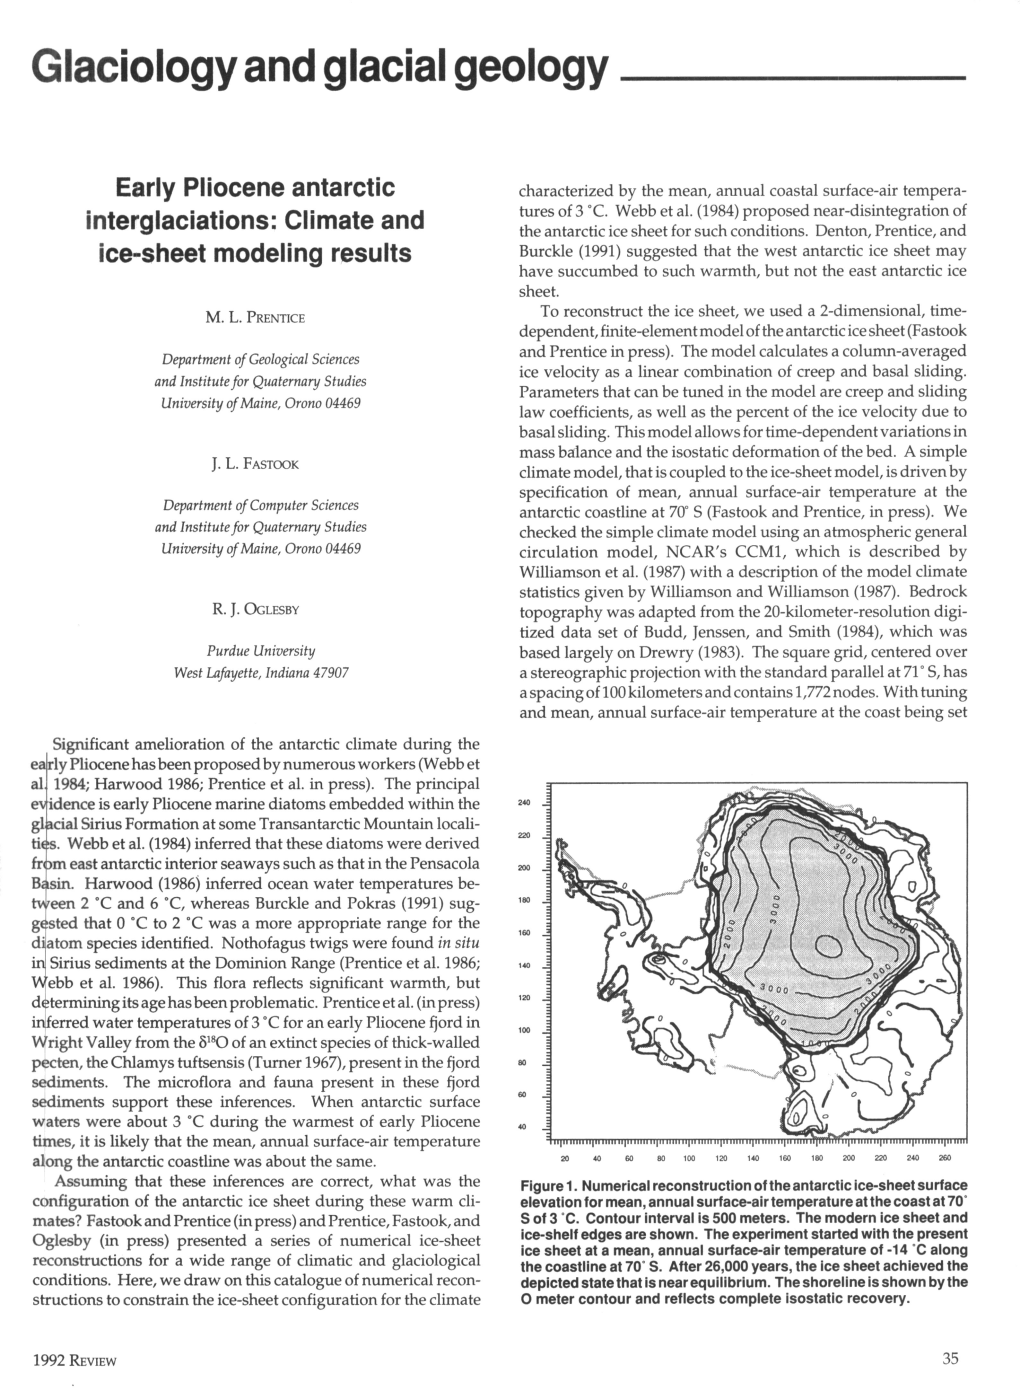 Glaciology and Glacial Geology Early Pliocene Antarctic Interglaciations